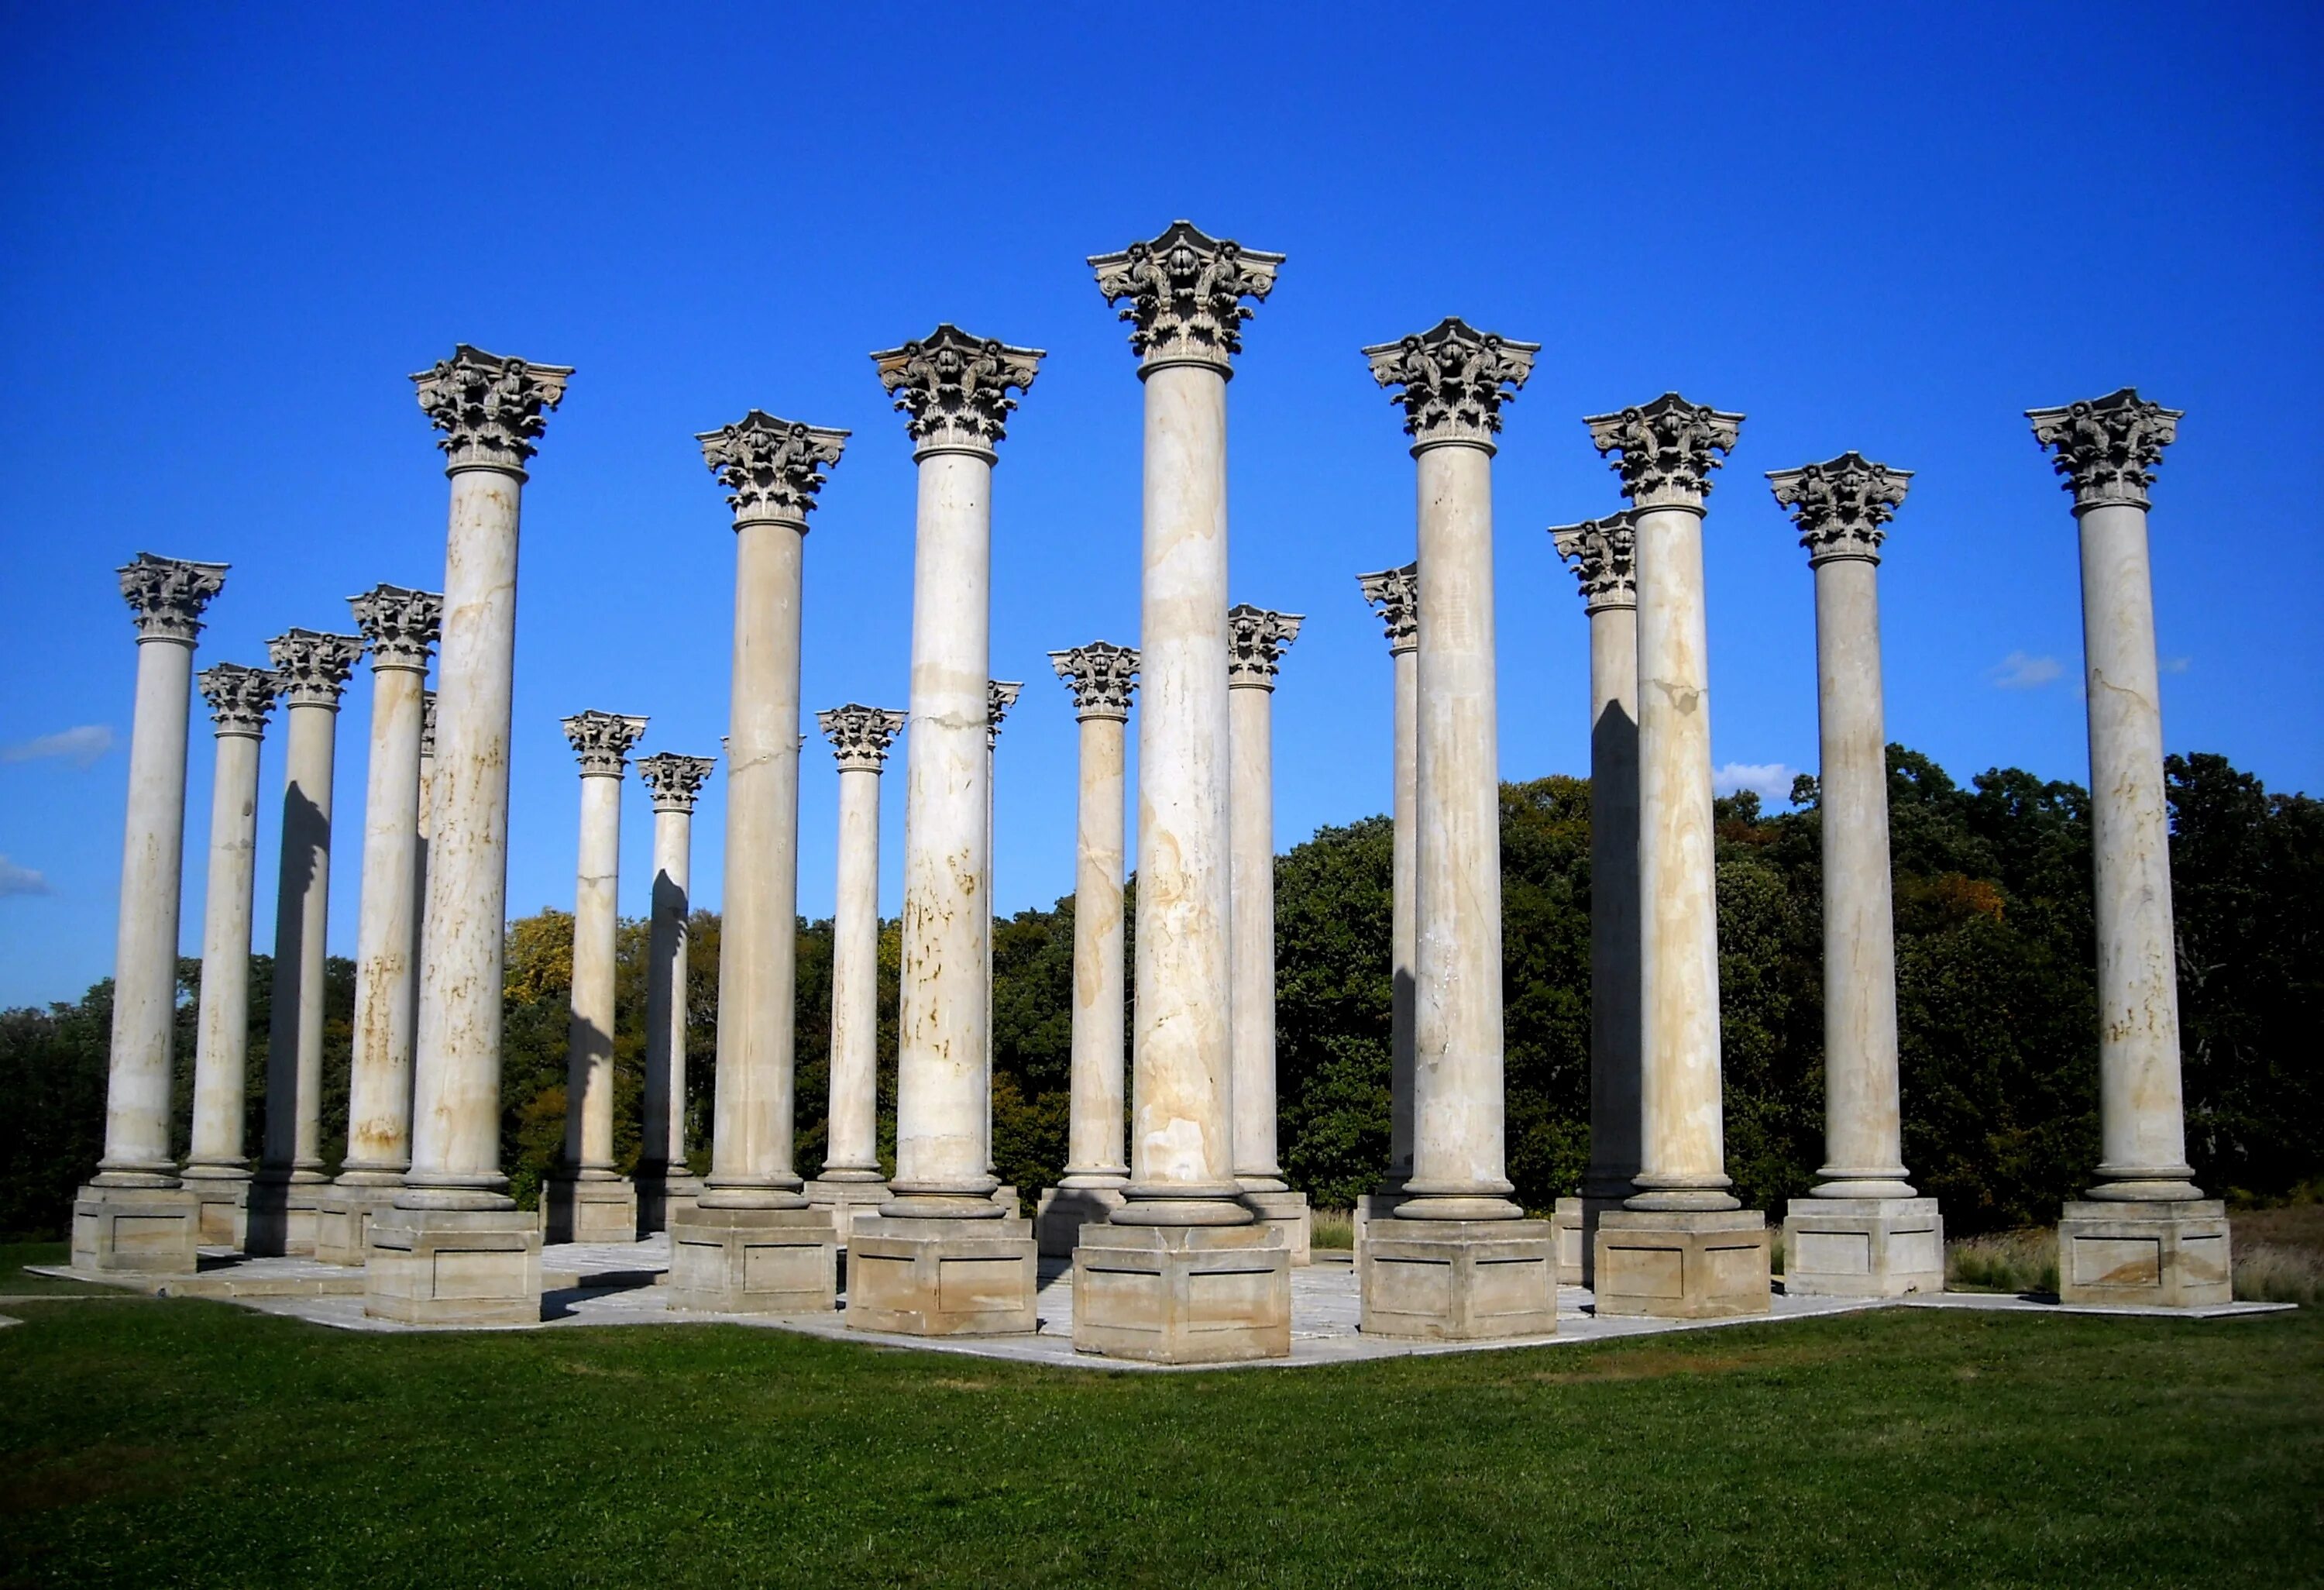 Page columns. Византийские колонны. Колумнс. Columns. Пьедесталы и колонны Византии.